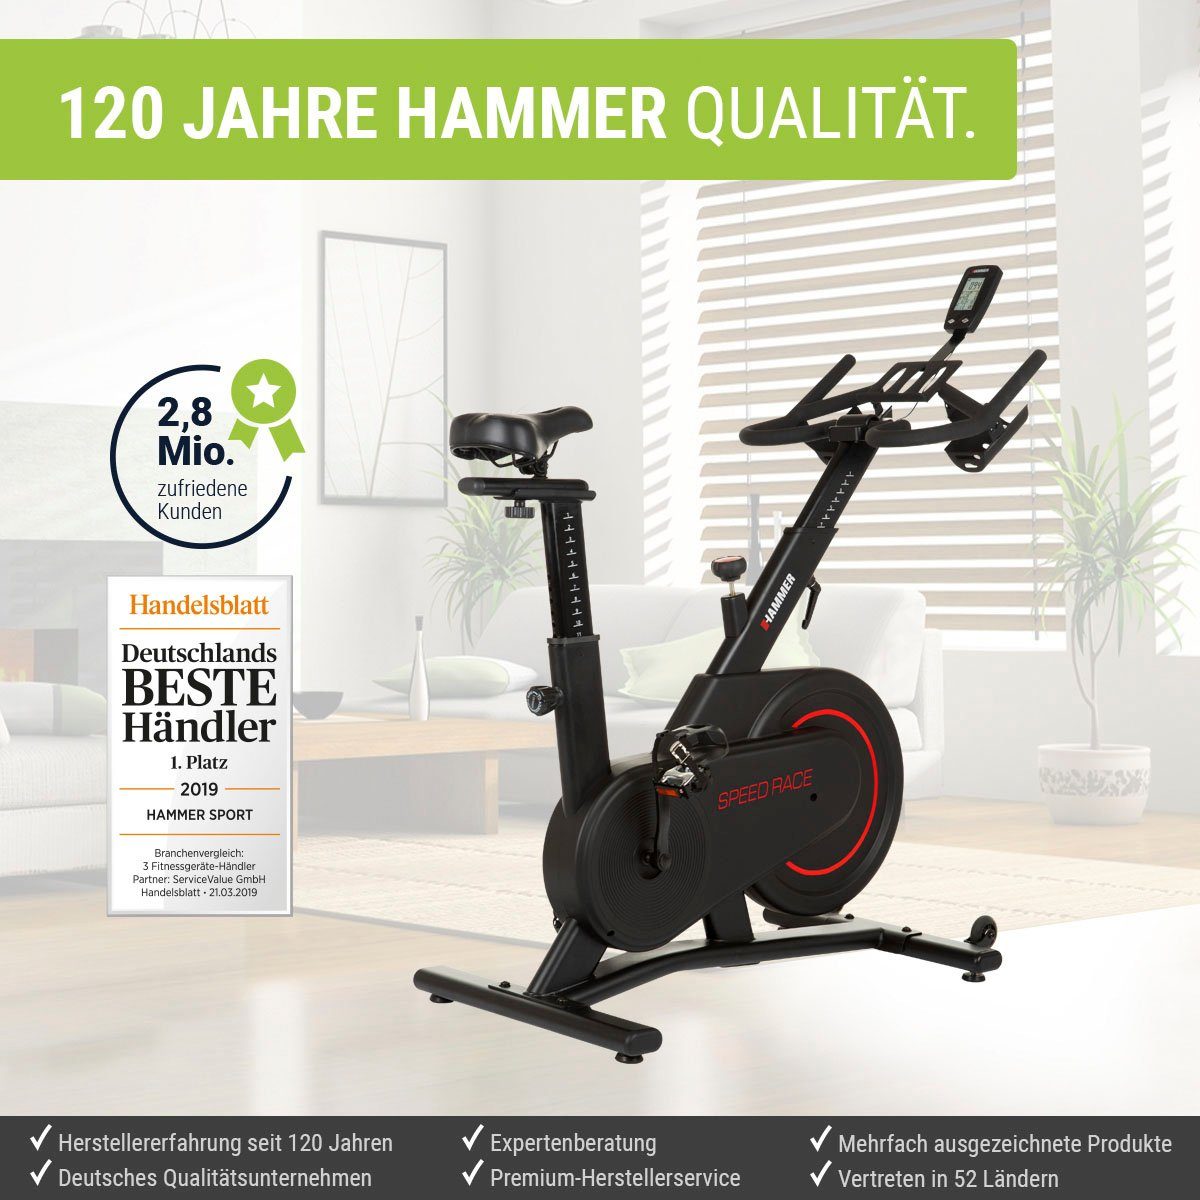 Fitness-Apps mit Hammer Racer, per Smartphone/Tablet Trainingscomputer Speedbike LCD-Anzeige,